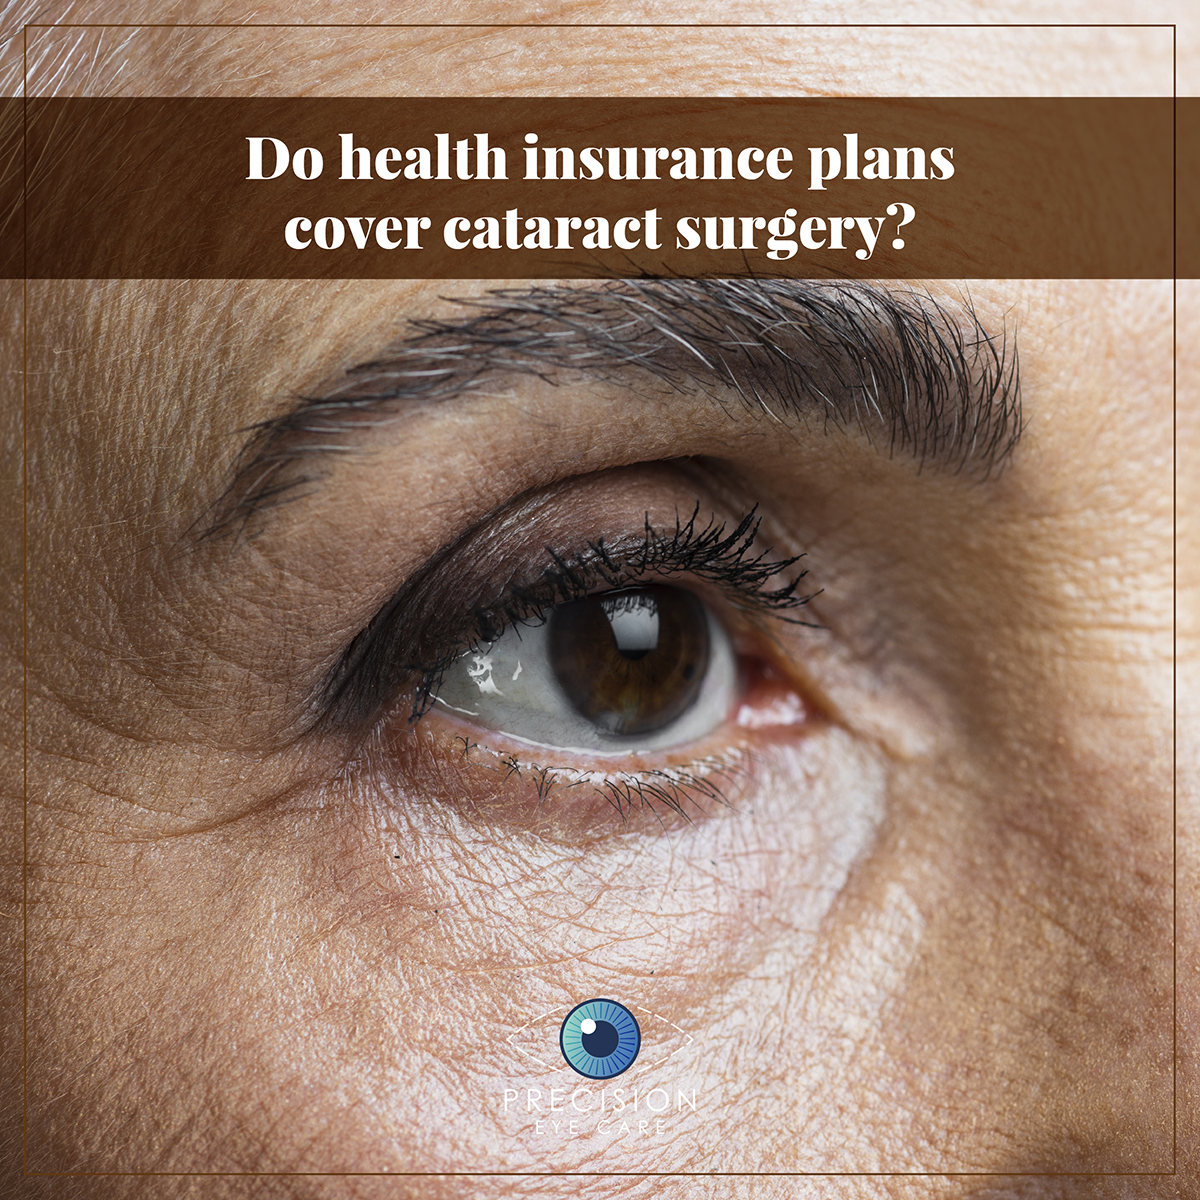 Do health insurance plans cover cataract surgery?